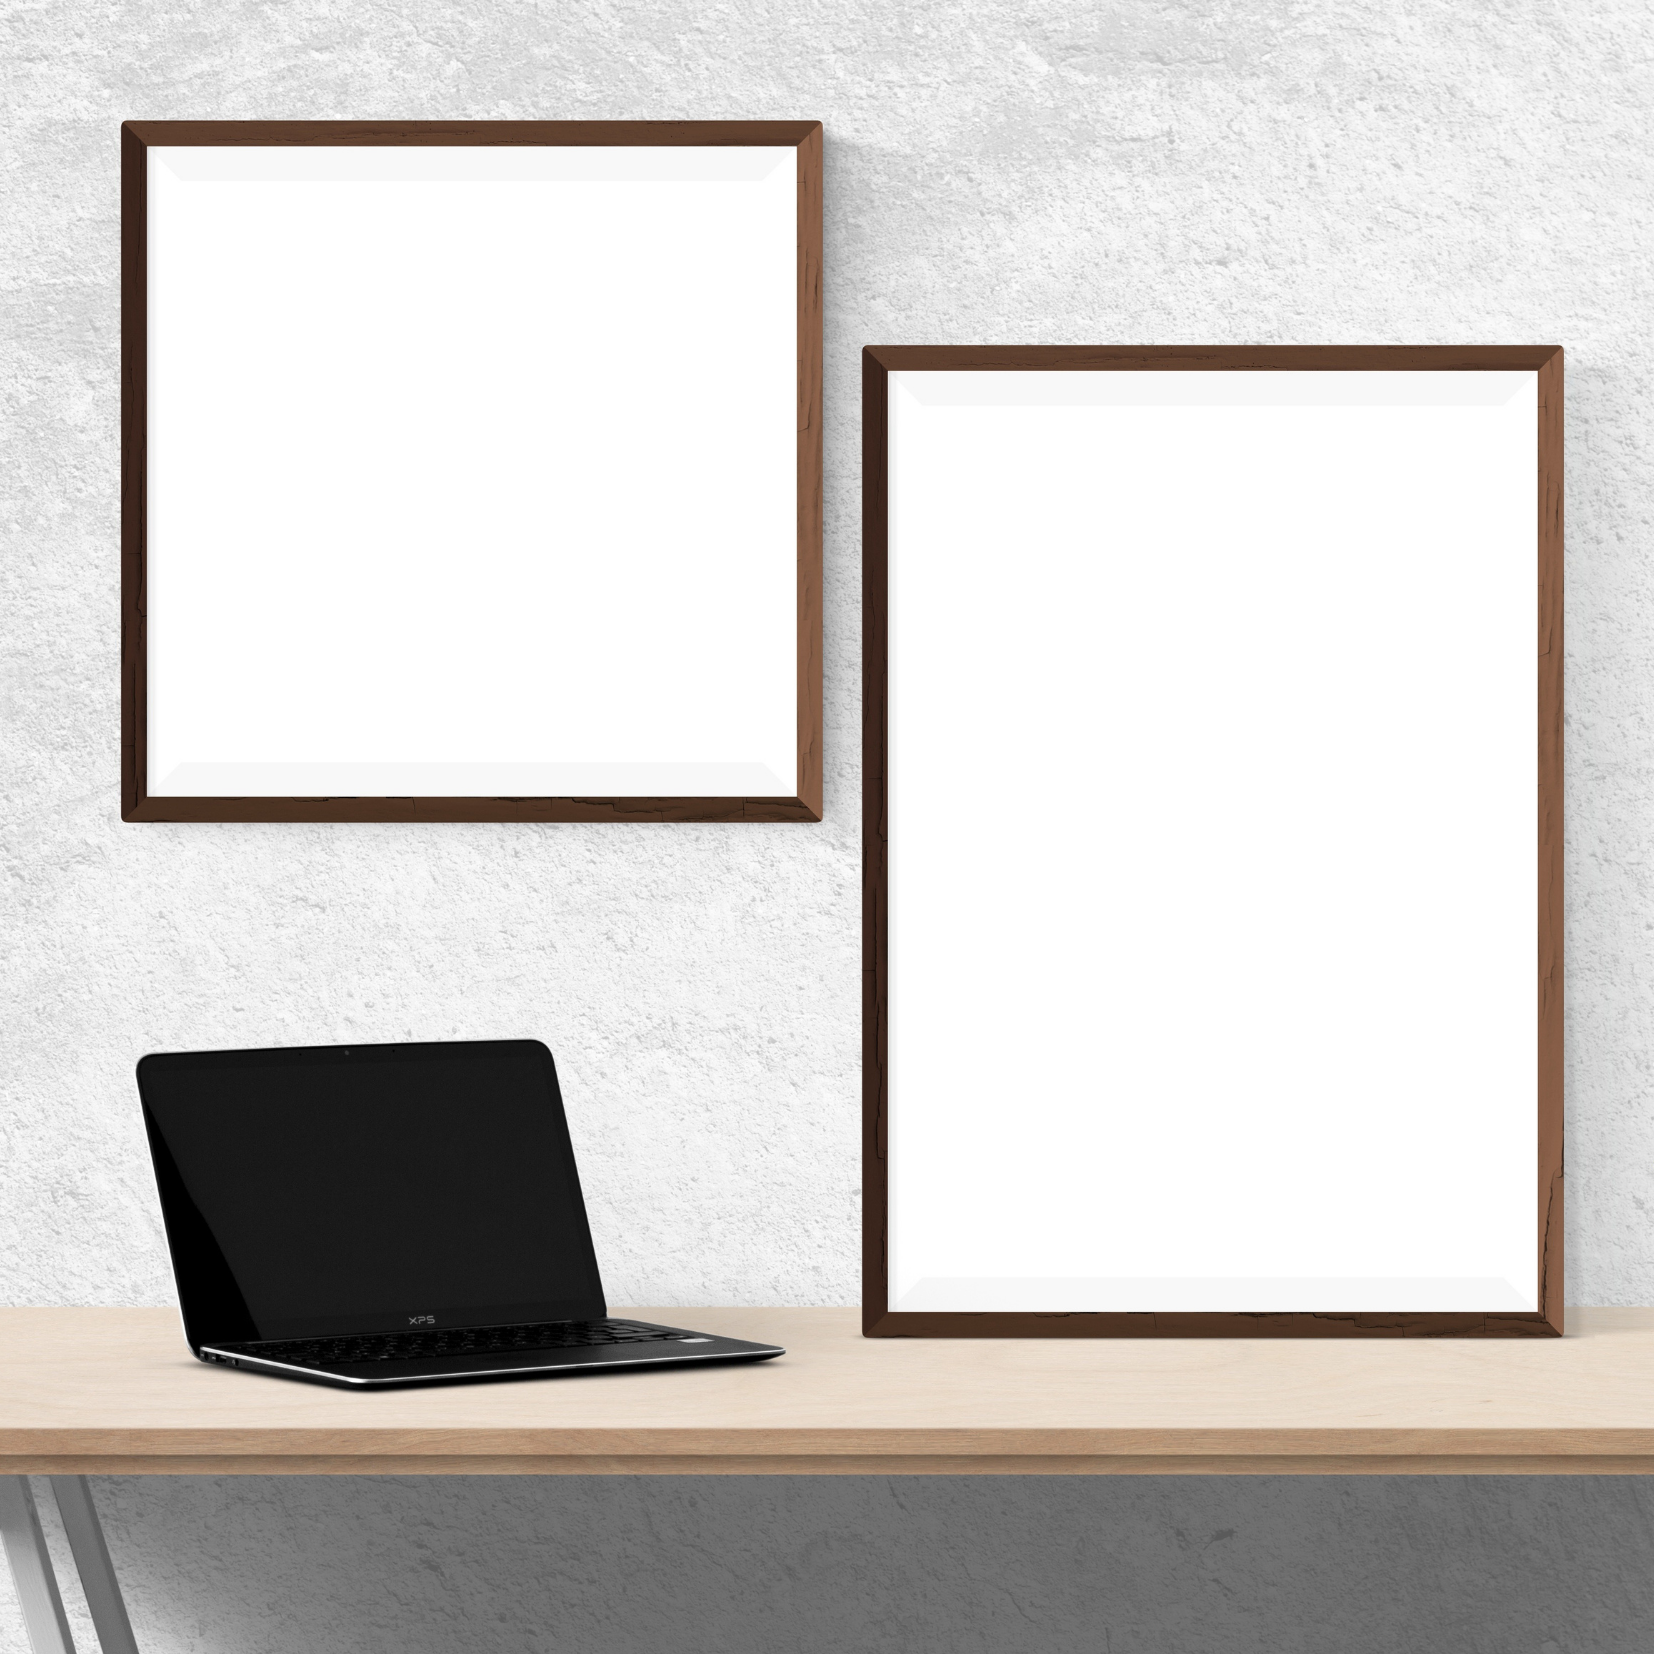 2 frames, desk & laptop depicting Consulting for Van Dusen Nutrition